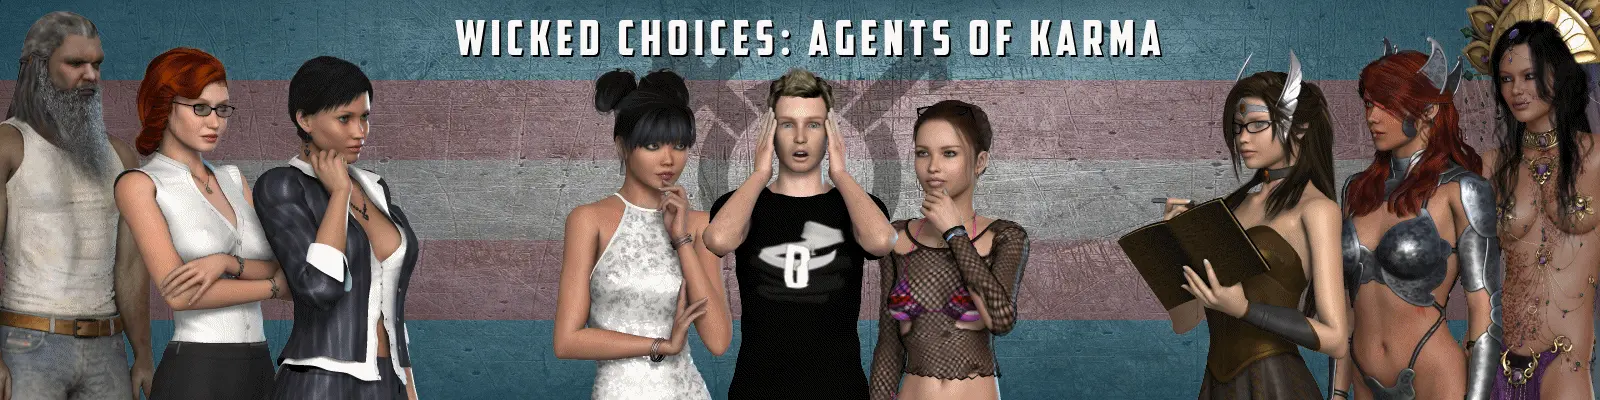 Wicked Choices: Agents of Karma [v0.1.5] main image